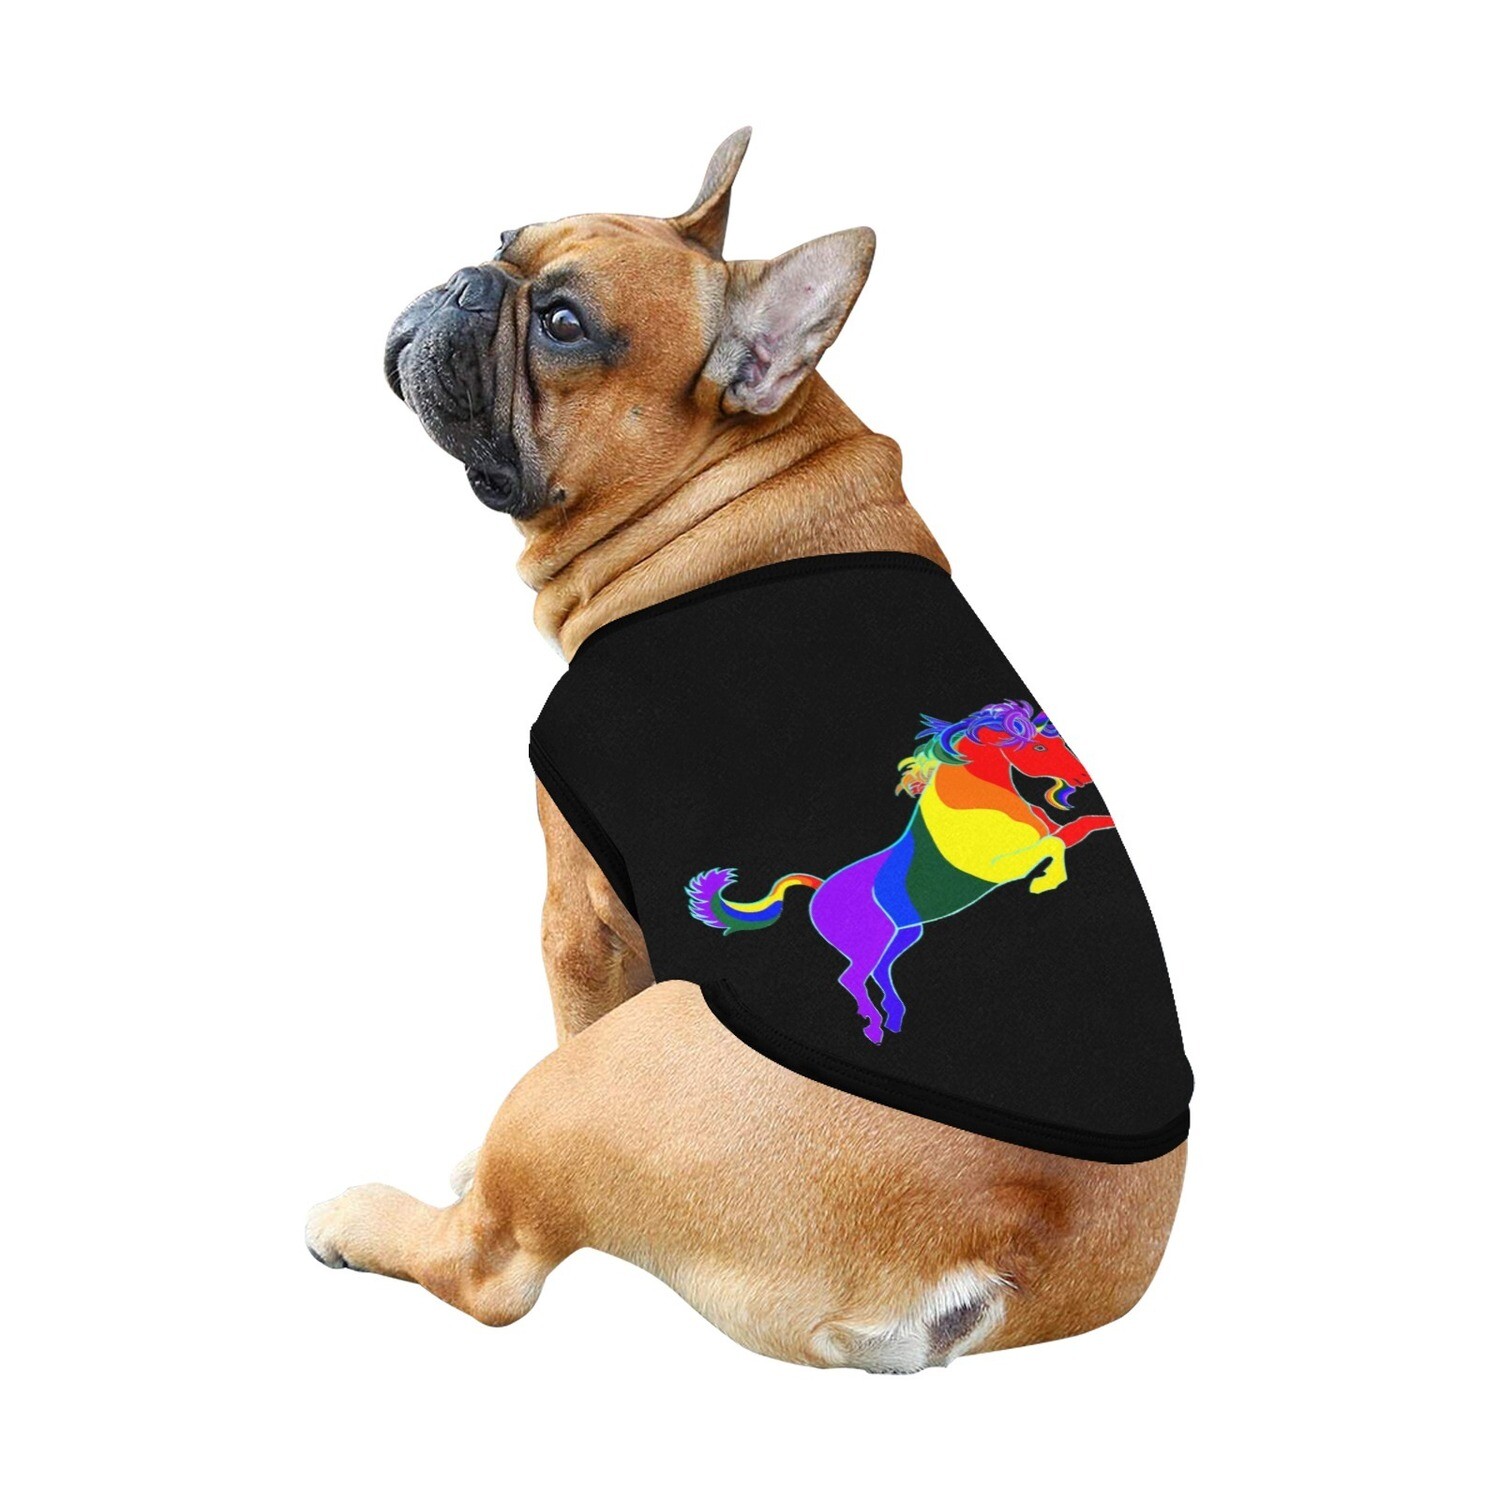 🐕🏳️‍🌈 Love is Love LGBTQ Unicorn by Maru, Dog Tank Top, Dog shirt, Dog t-shirt, Dog clothes, Dog clothing, 7 sizes XS to 3XL, LGBT, Dog gift, Gift for dogs, pride flag, rainbow flag